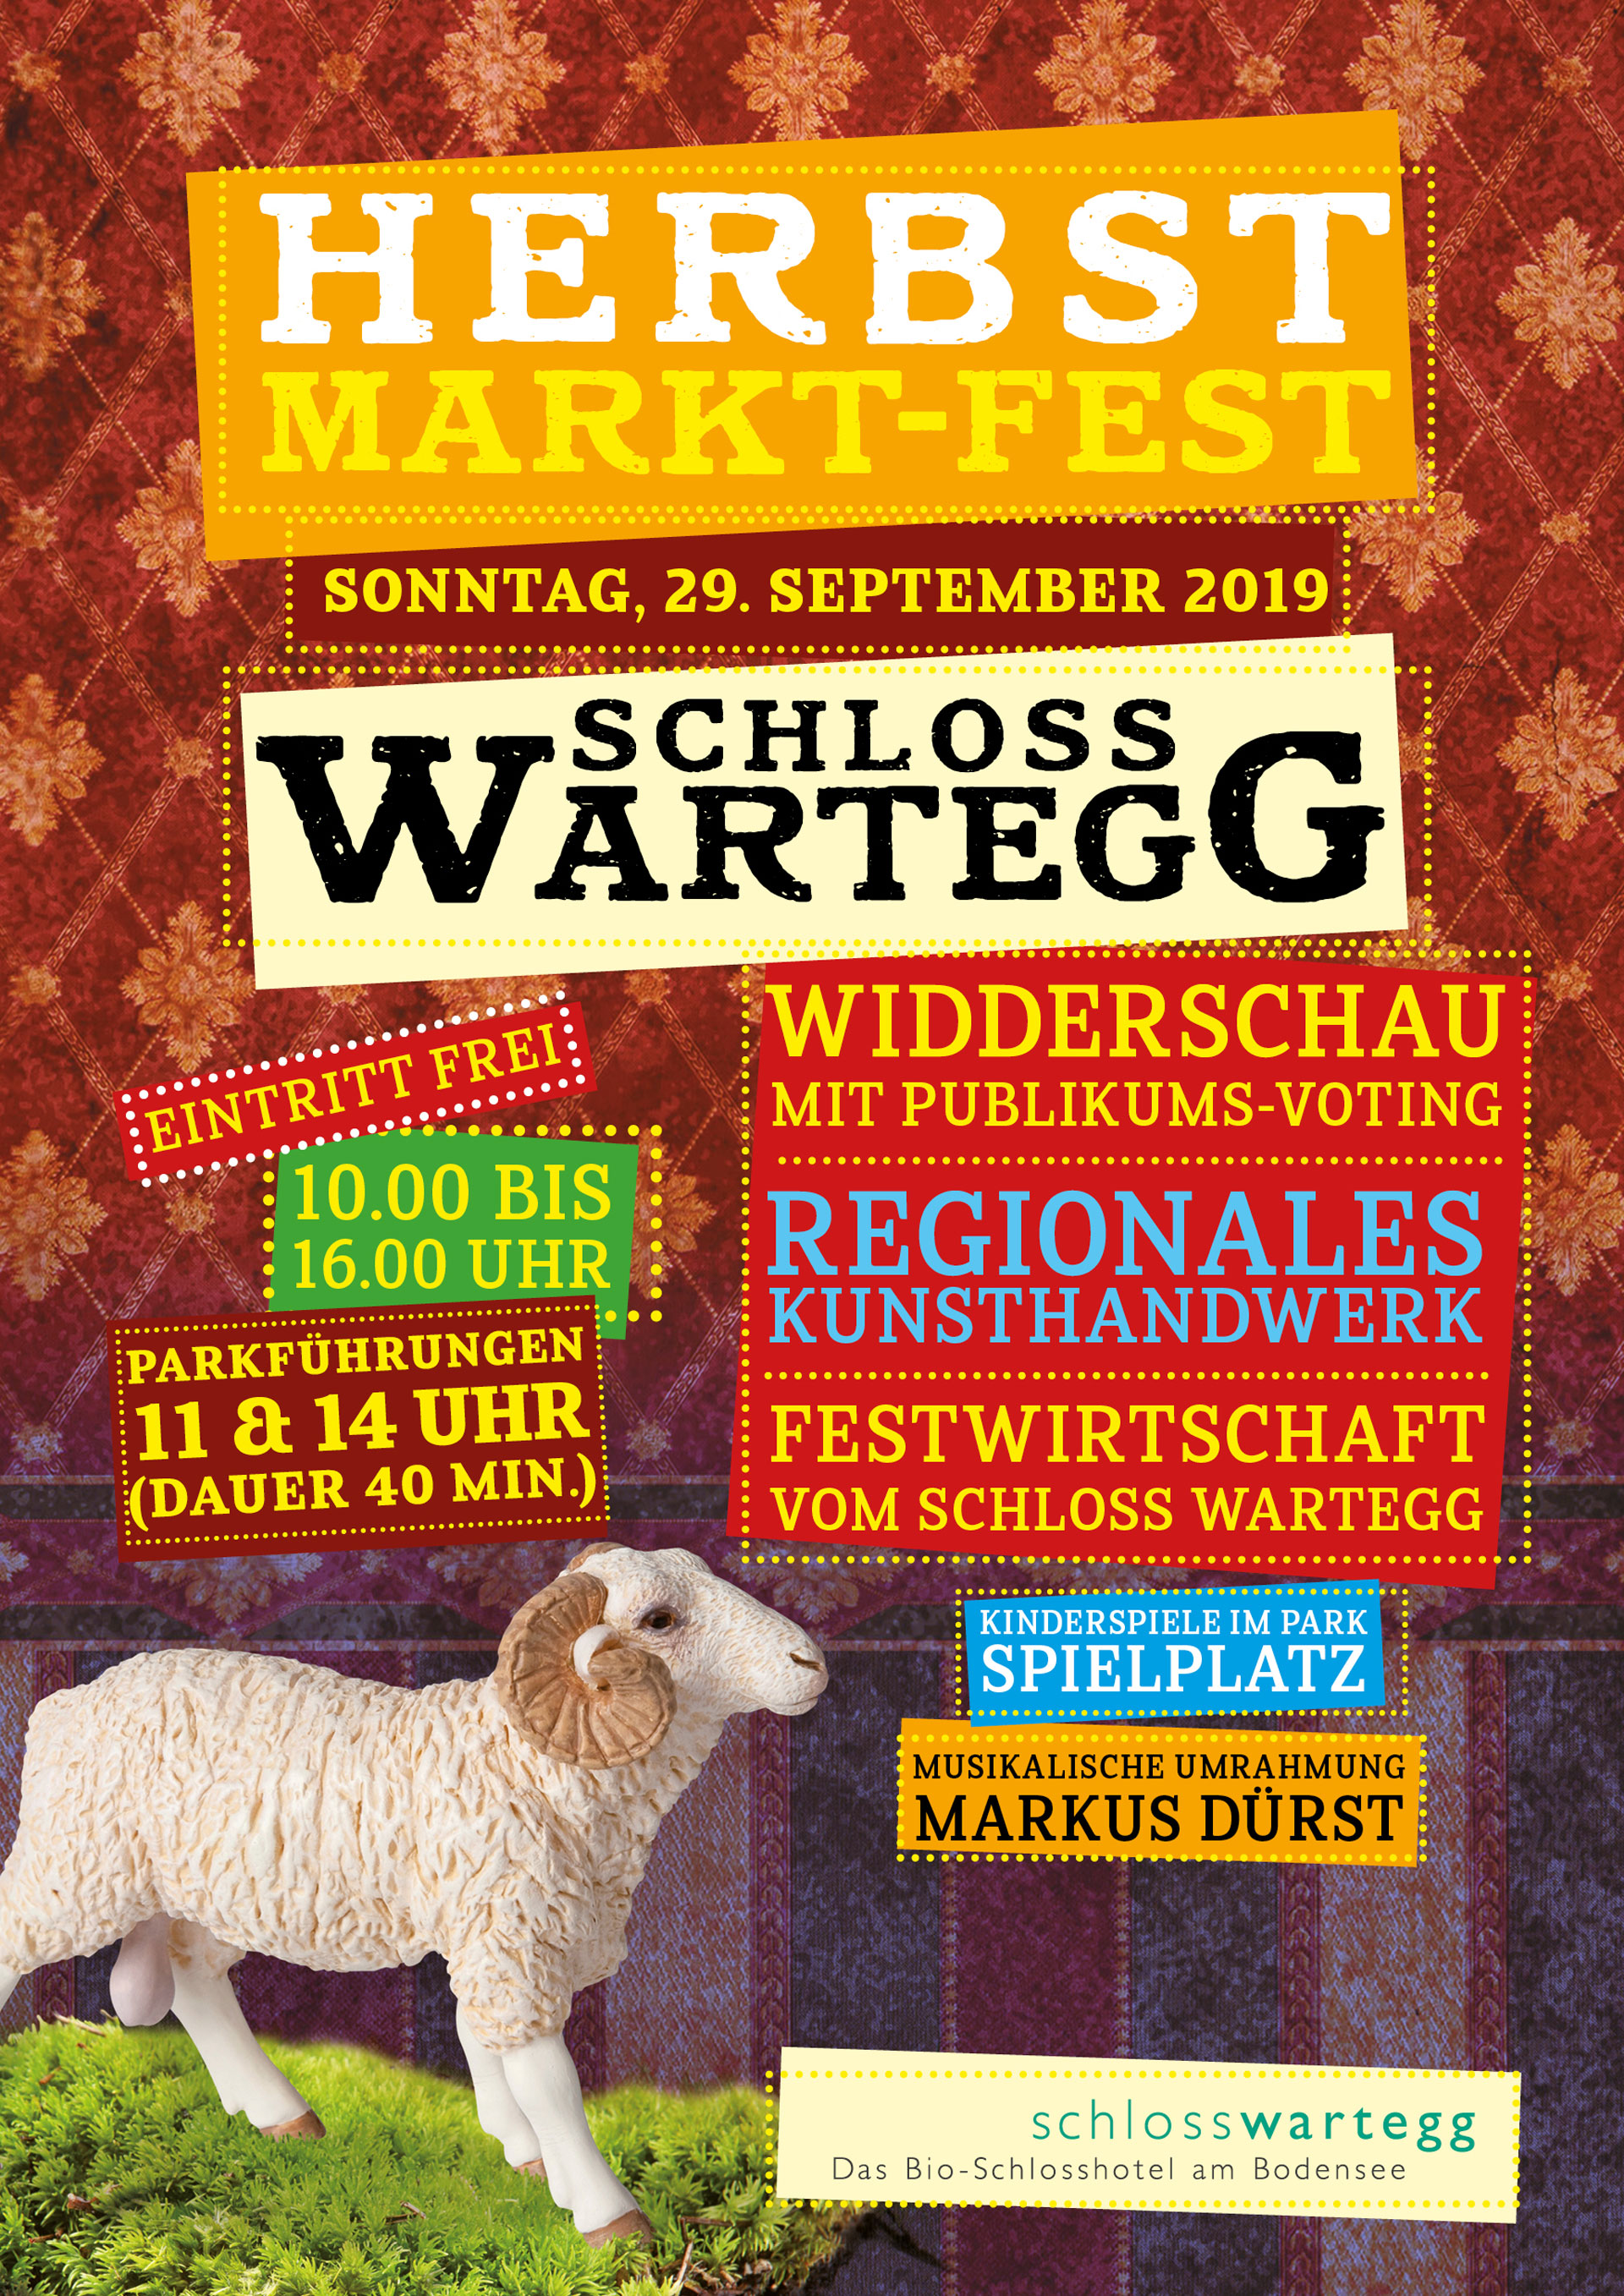 SW_Flyer_Herbstmarkt-Fest_2019_def.jpg